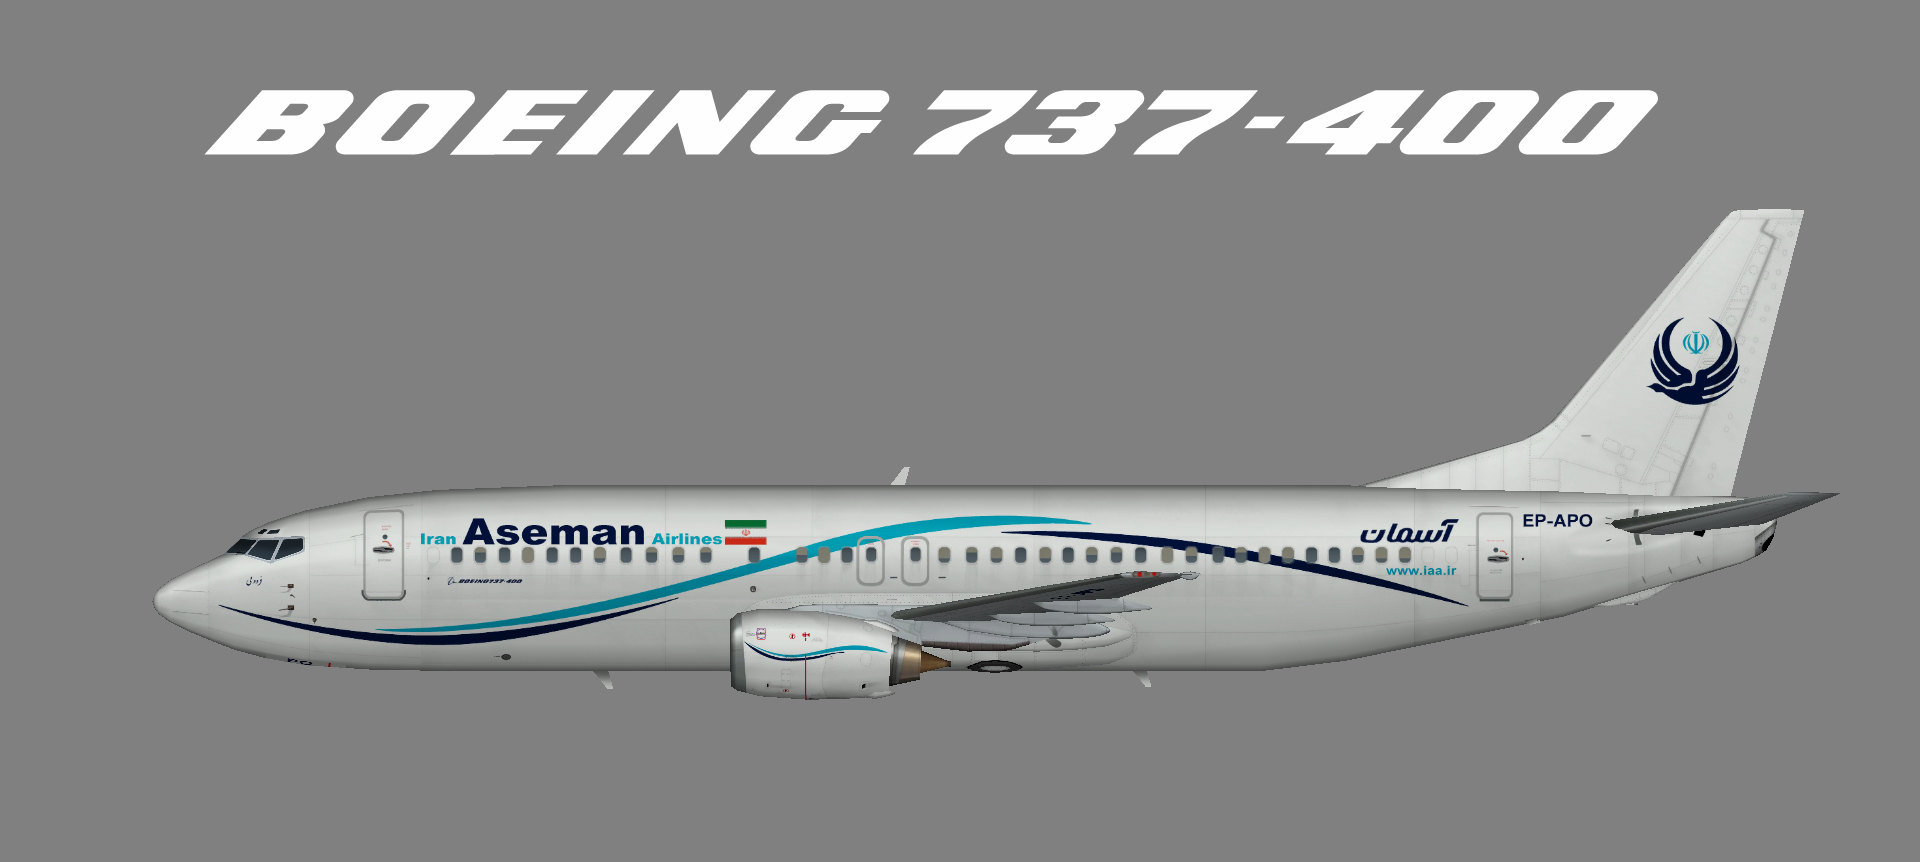 Iran Aseman 737-400